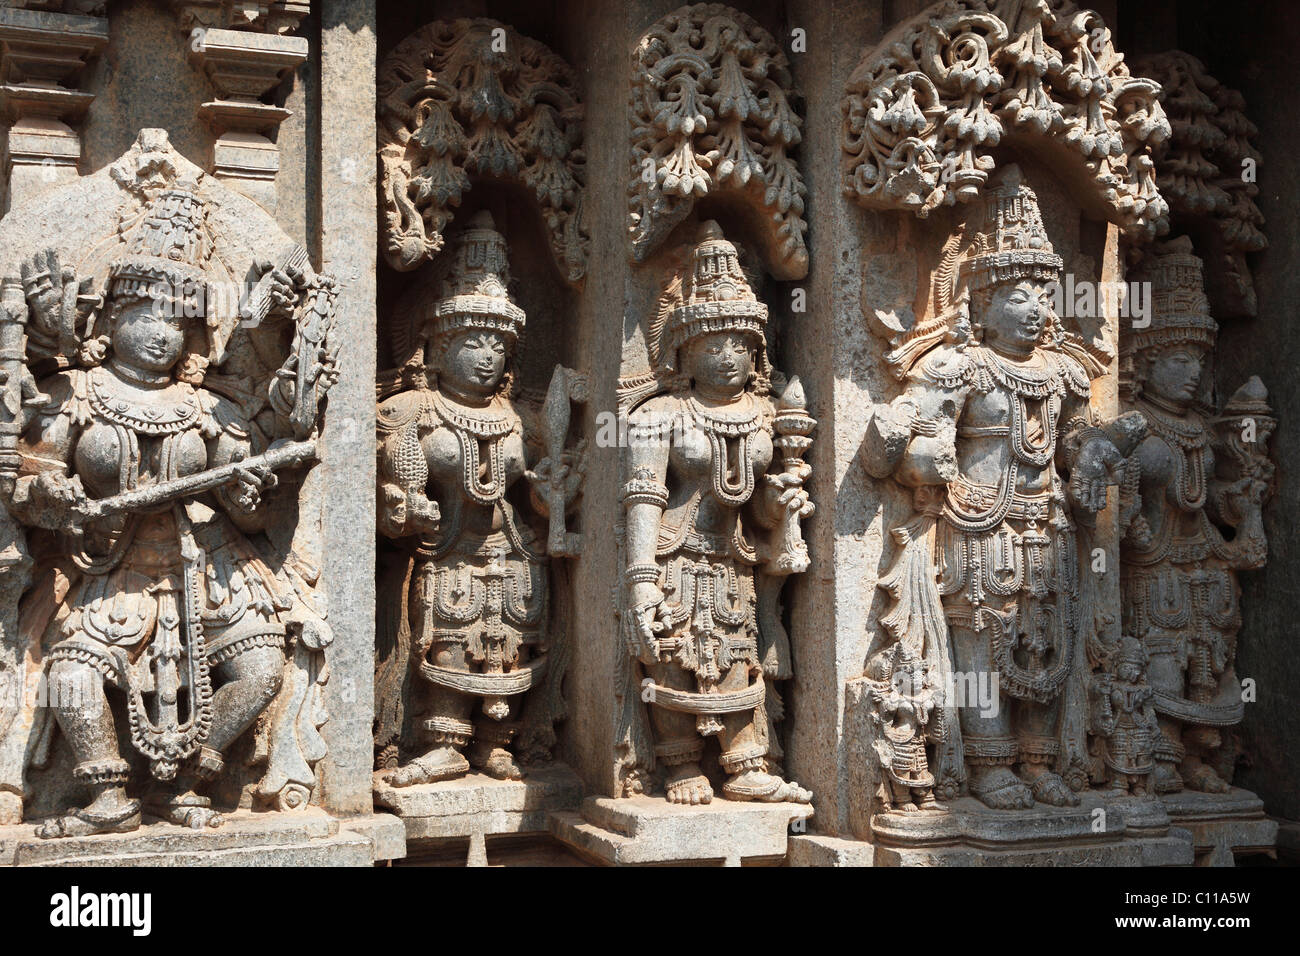 Imágenes de divinidades en el muro del templo, el templo Kesava Keshava, estilo Hoysala Somnathpur, Somanathapura, Karnataka, India del Sur Foto de stock